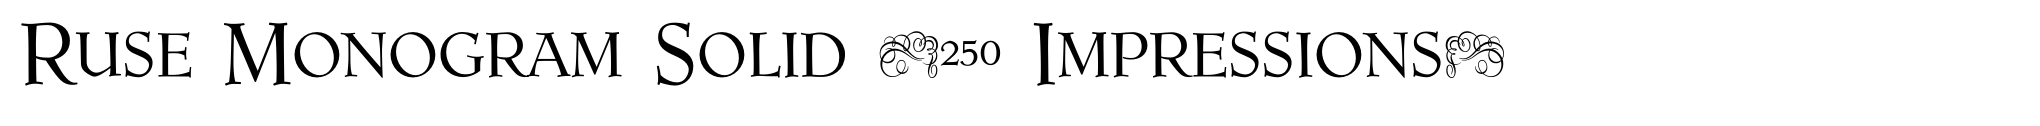 Ruse Monogram Solid (250 Impressions) image